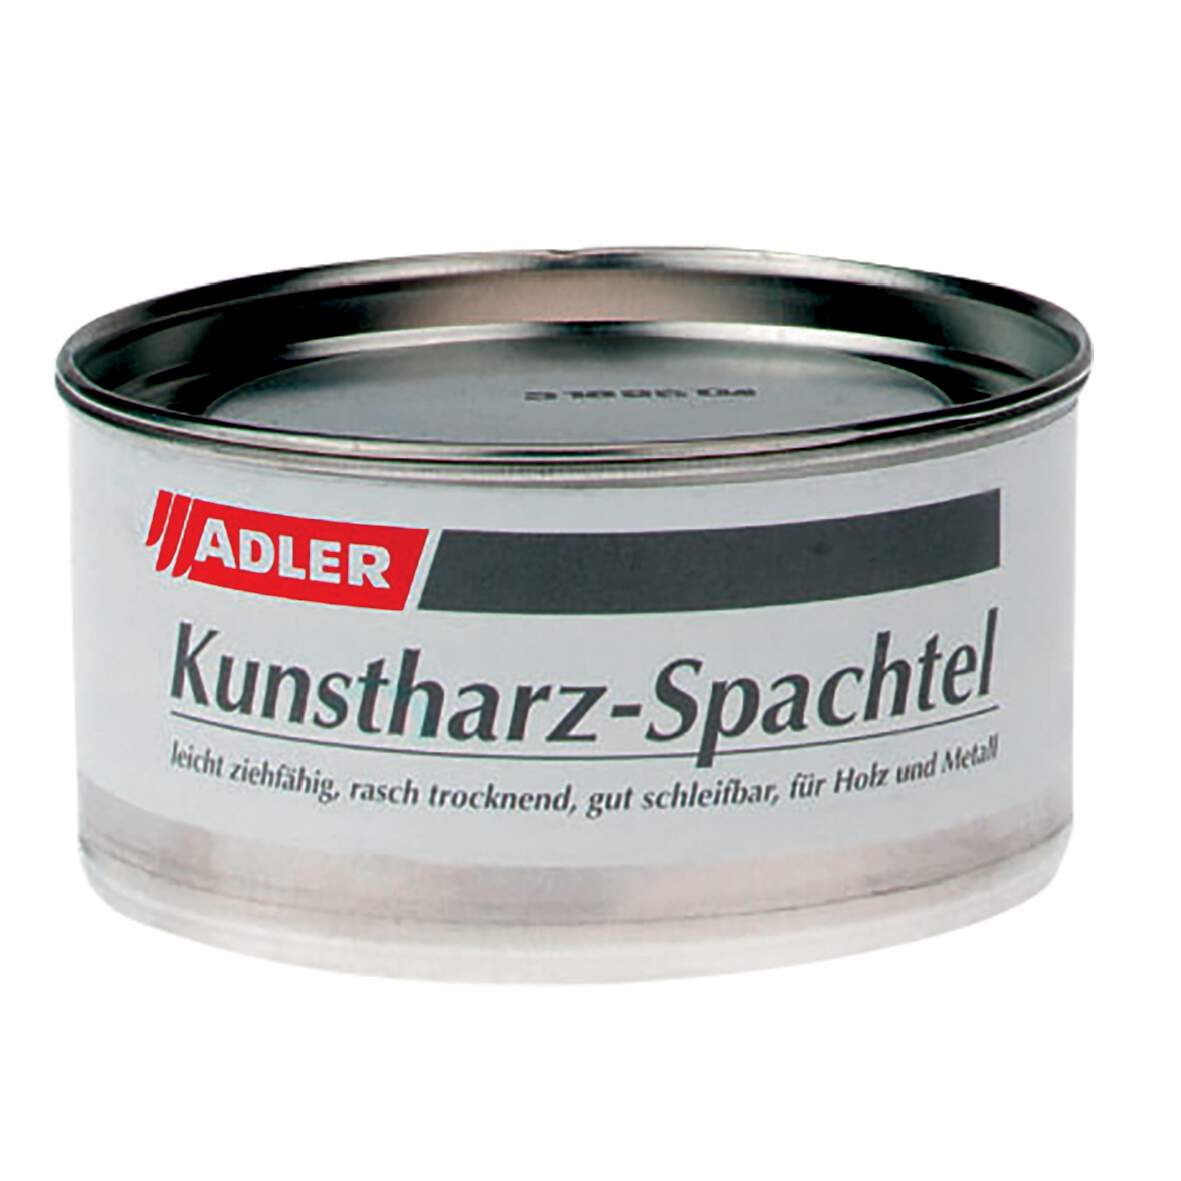 1094622 - Kunstharz-Spachtel